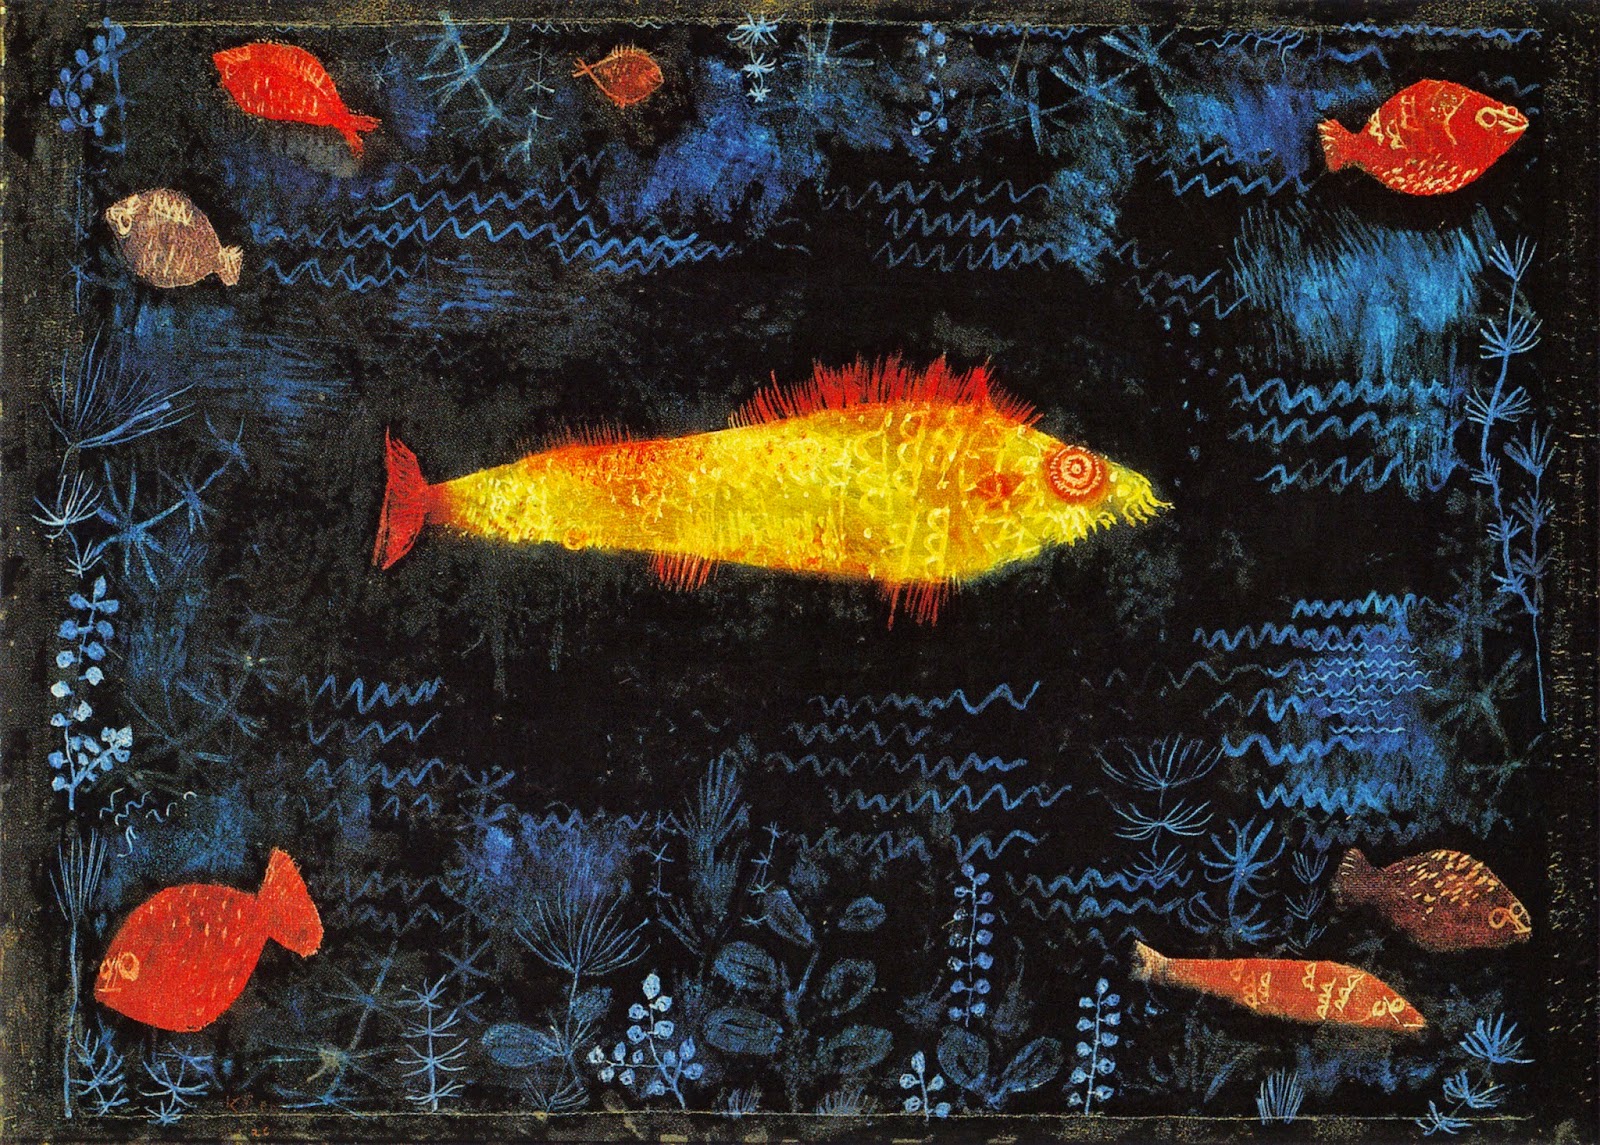 Paul Klee, Le poisson d’or, 1925 (© Gift of Friends of Carl Georg Heises, Bridgeman)